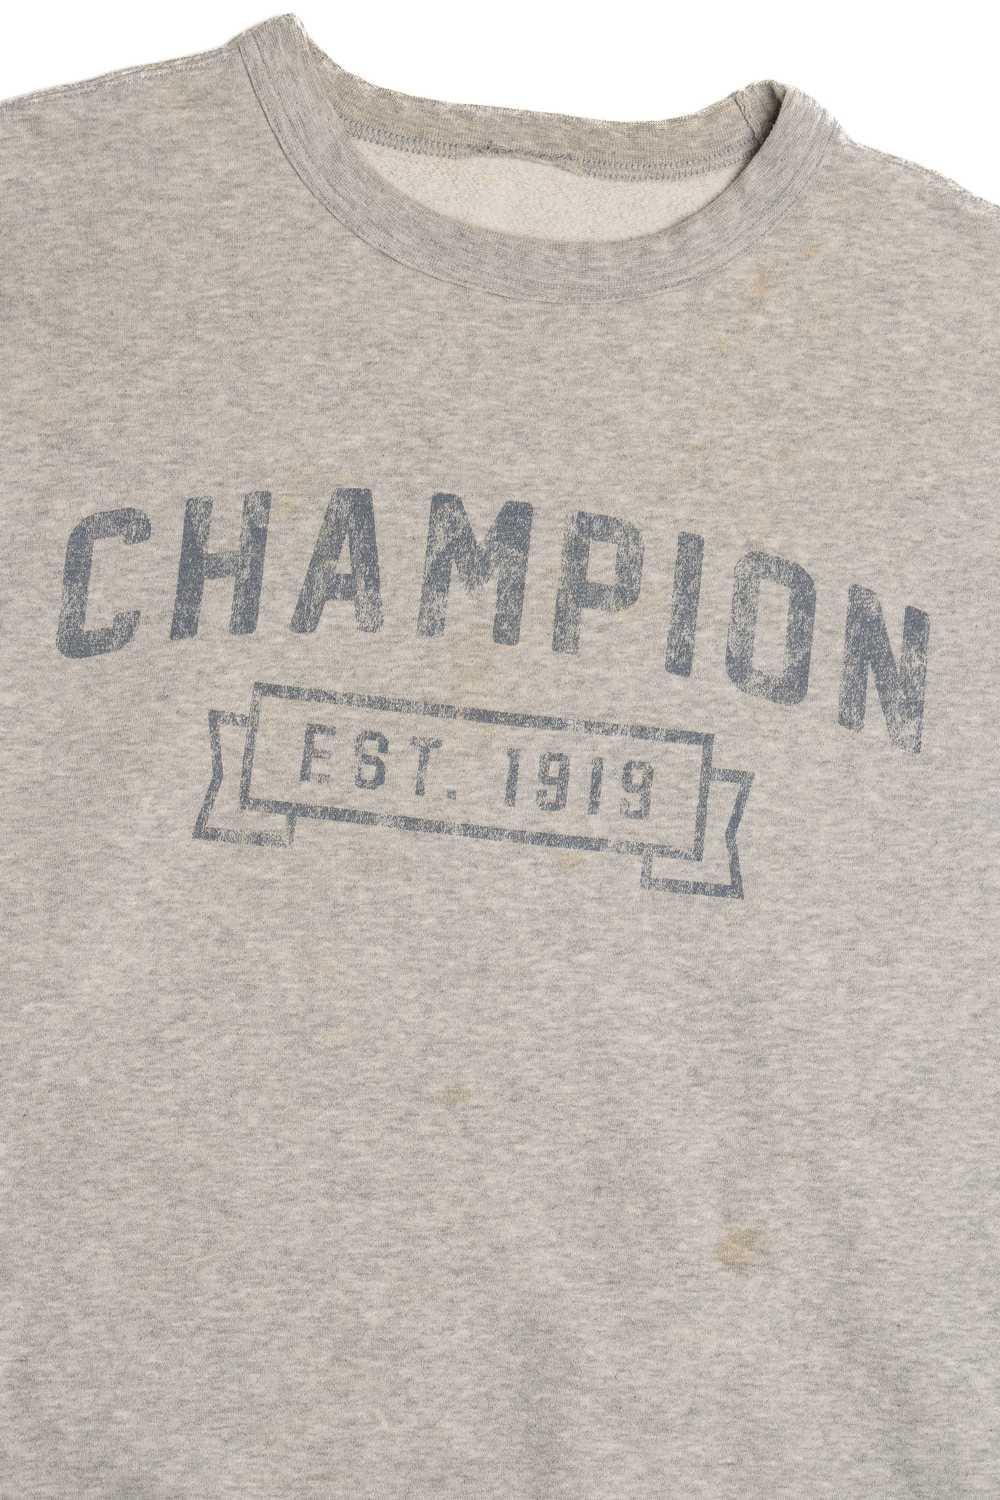 Vintage "Champion Est. 1919" Sweatshirt - image 2